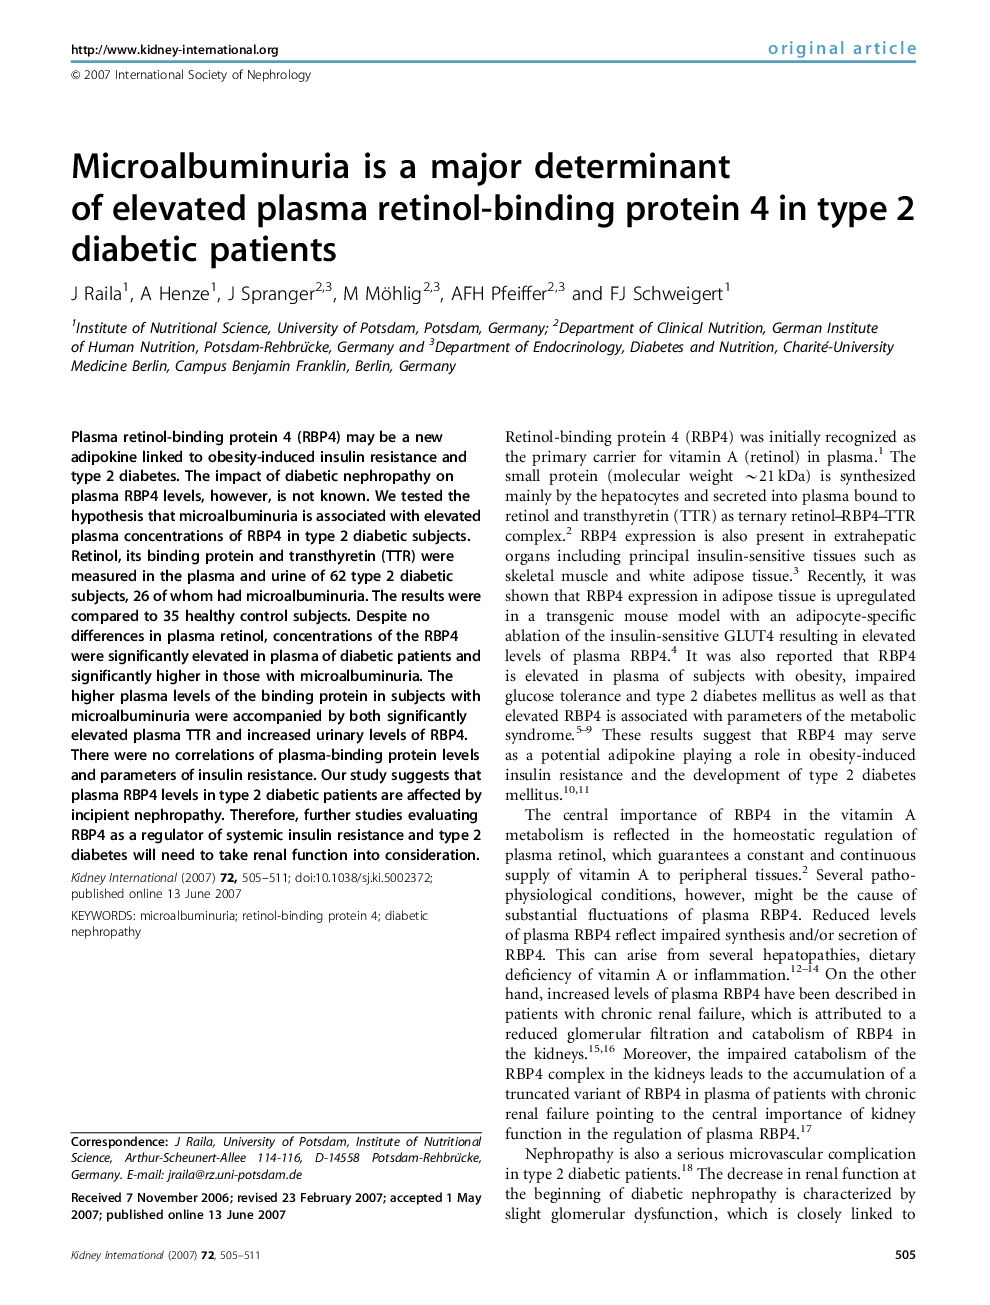 Microalbuminuria is a major determinant of elevated plasma retinol-binding protein 4 in type 2 diabetic patients